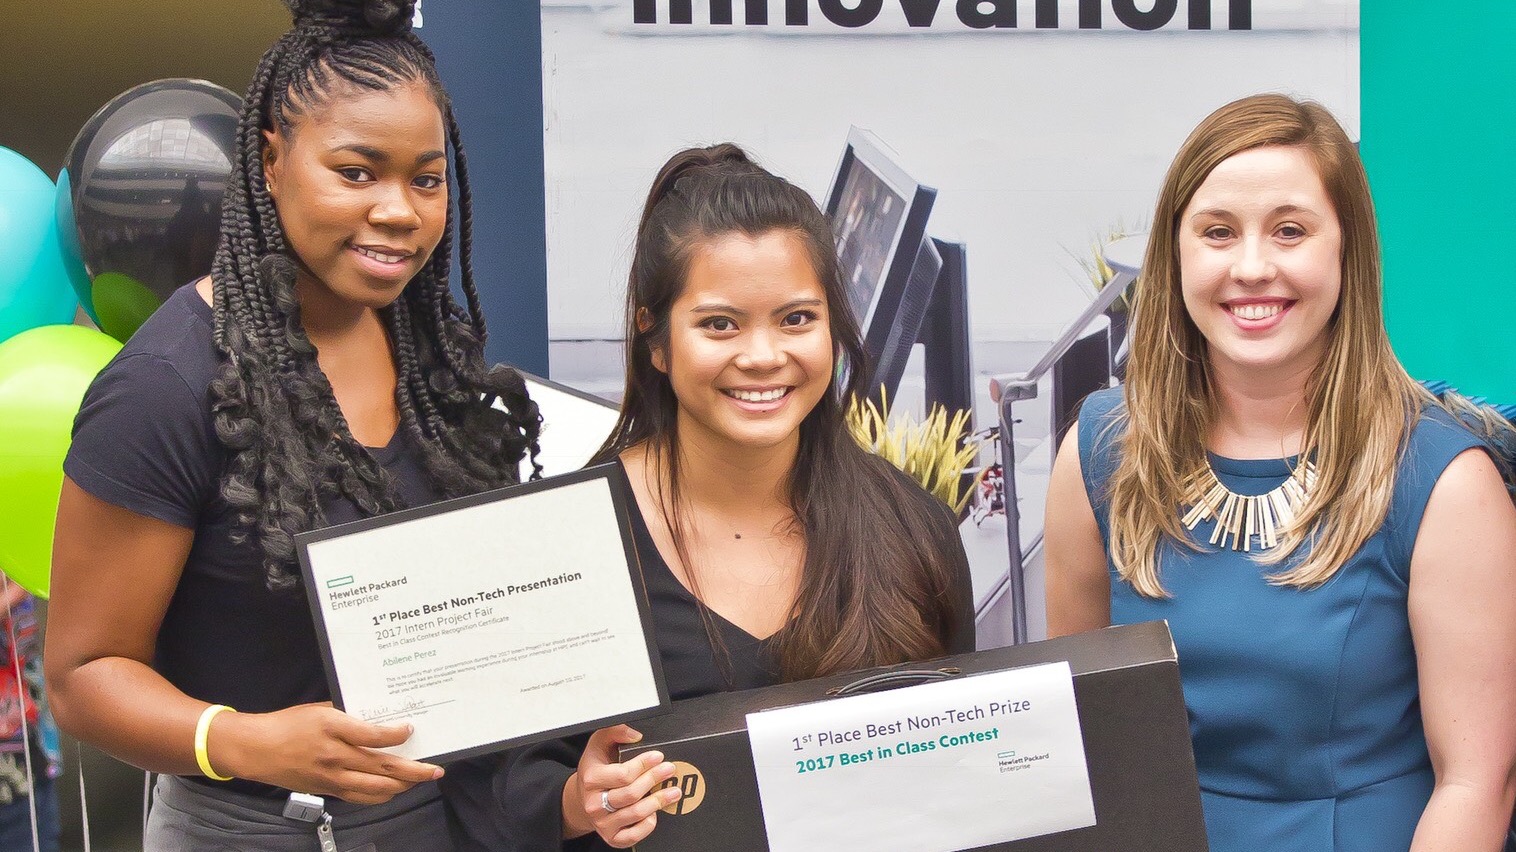 Abilene Perez (center), with other student interns at Hewlett Packard Enterprise